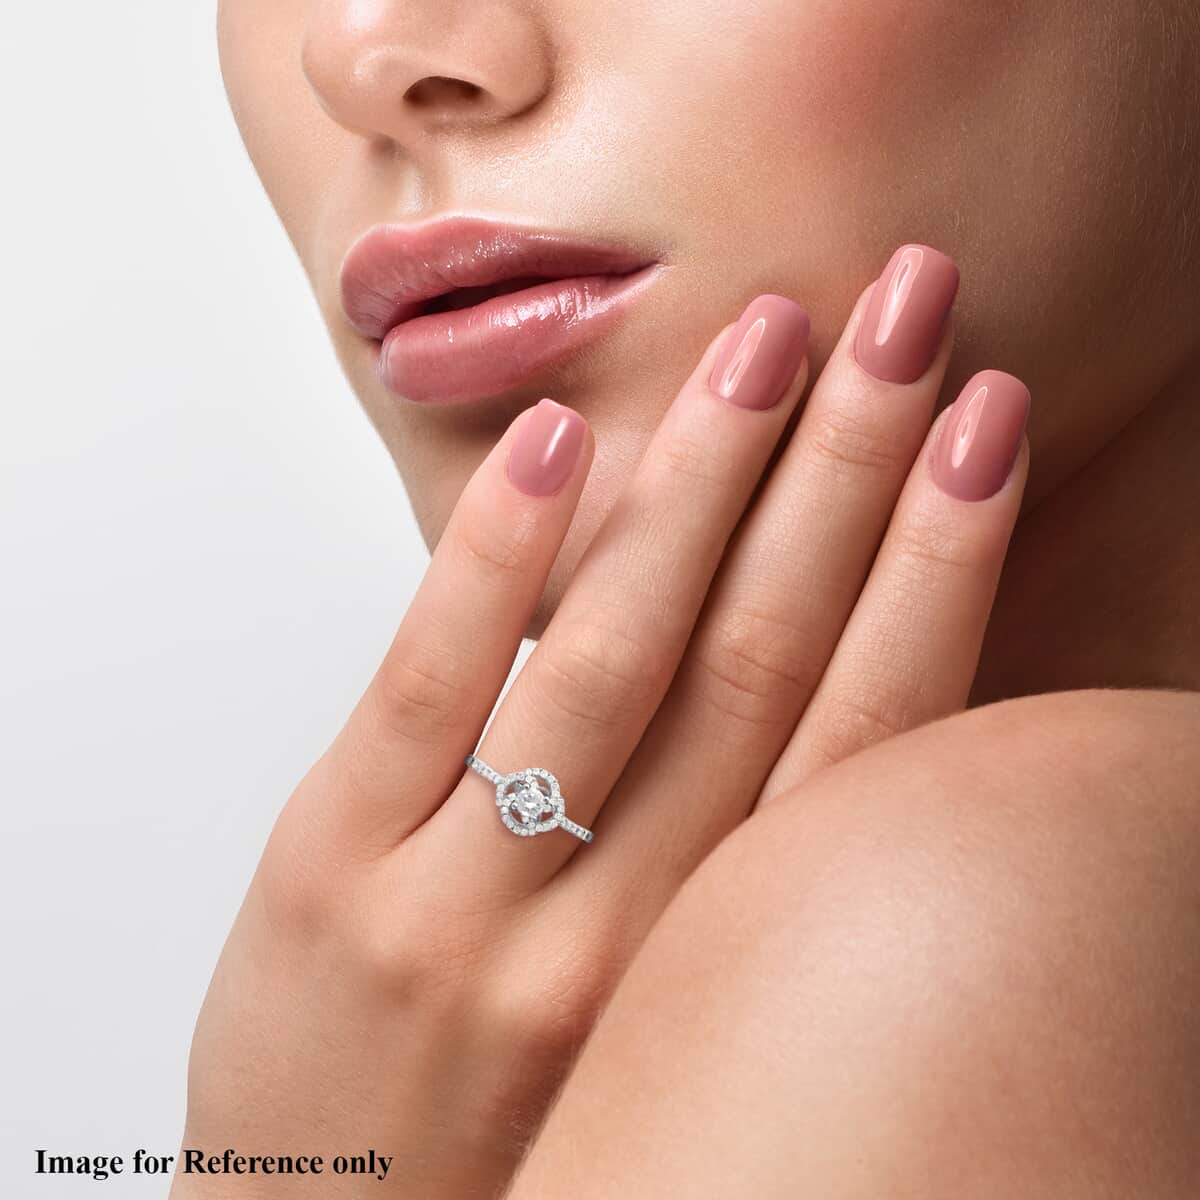 Luxoro 10K White Gold G-H I2-I3 Diamond Ring, Promise Rings (Size 9.0) 0.50 ctw image number 2